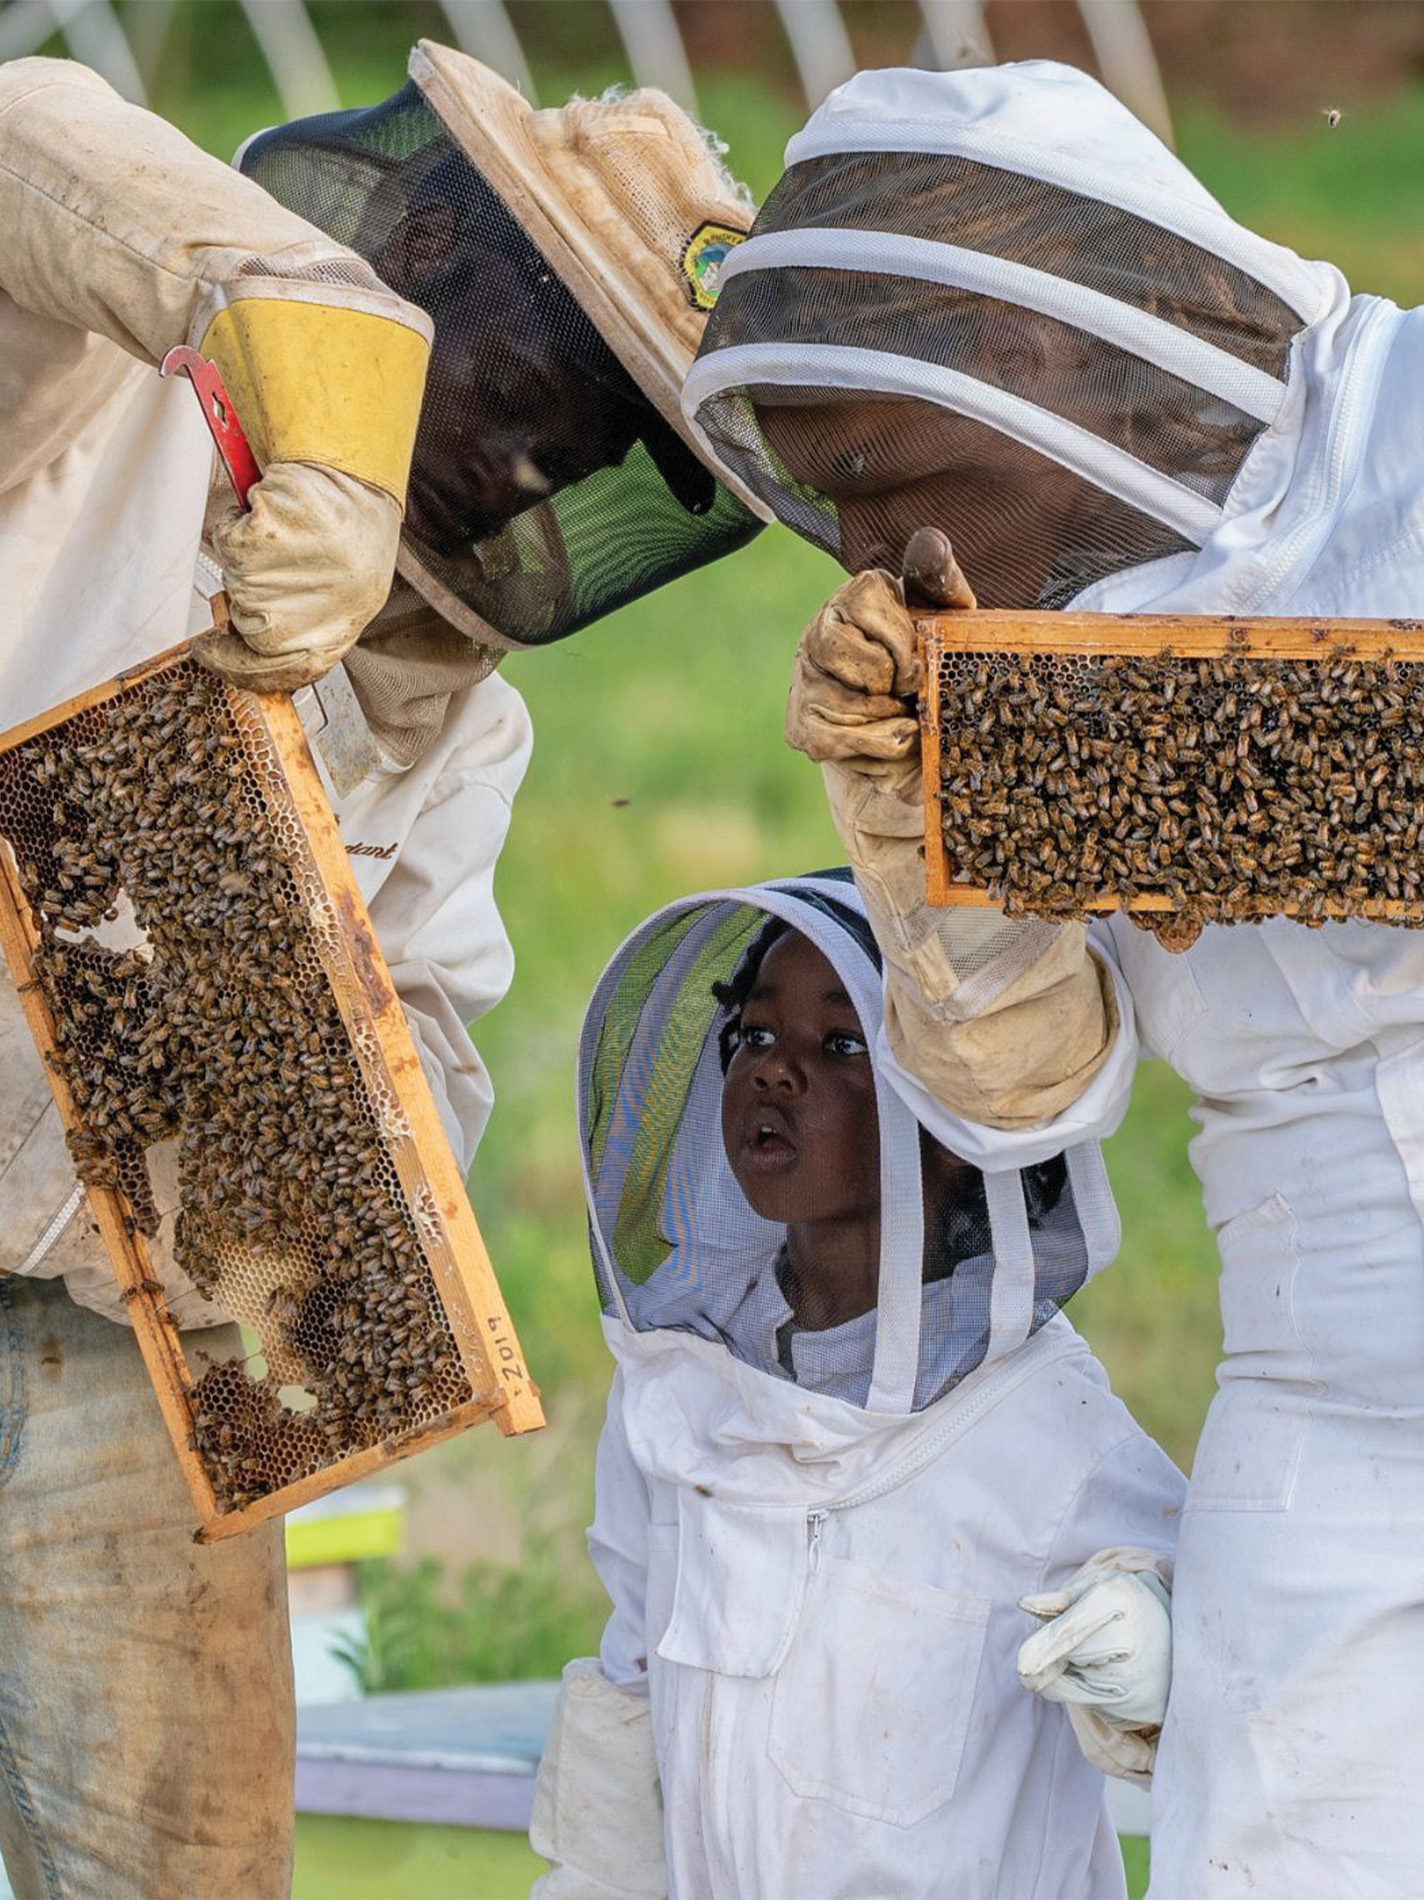 Do Women Make Better Beekeepers? – Savannah Bee Company